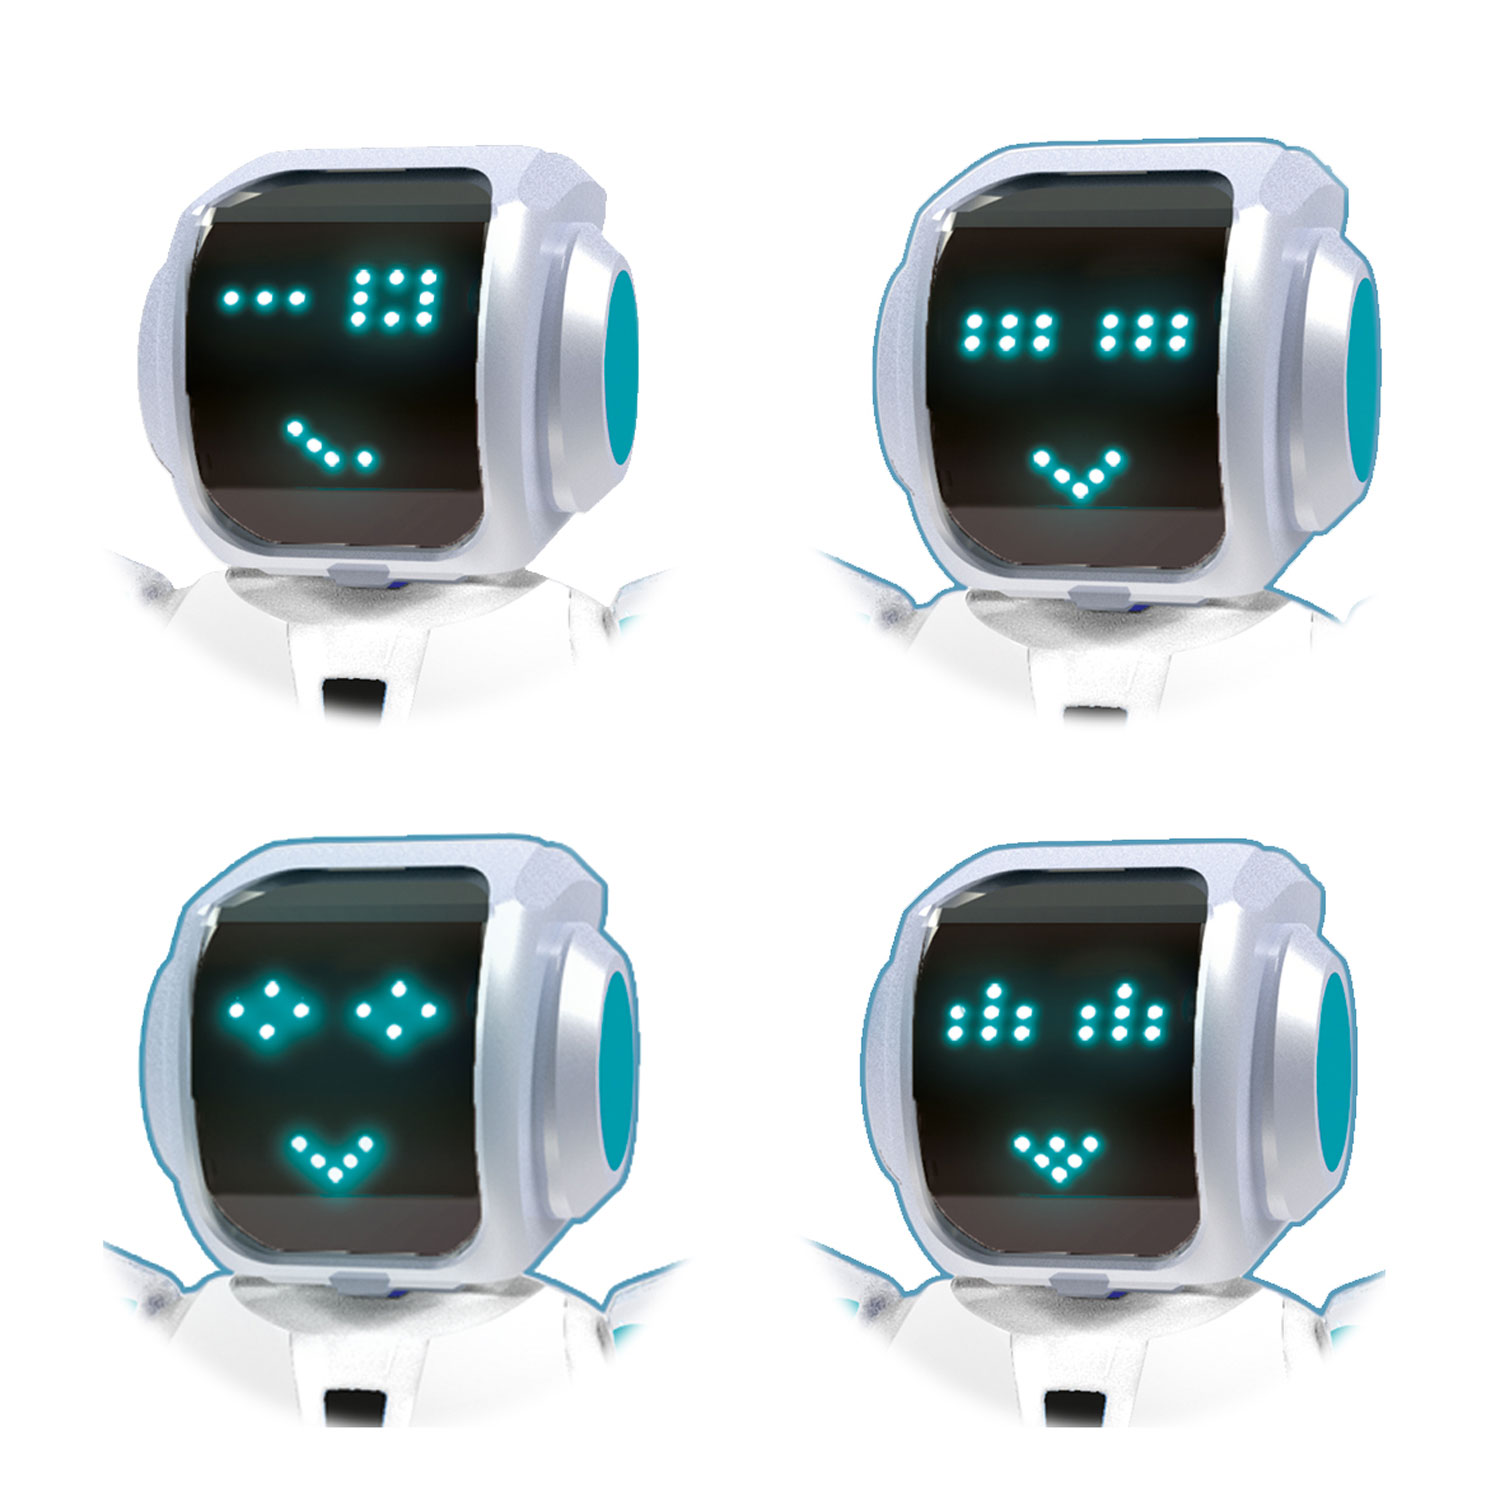 26 cm talande Robot - Xtreme Bots - Robbie Bot